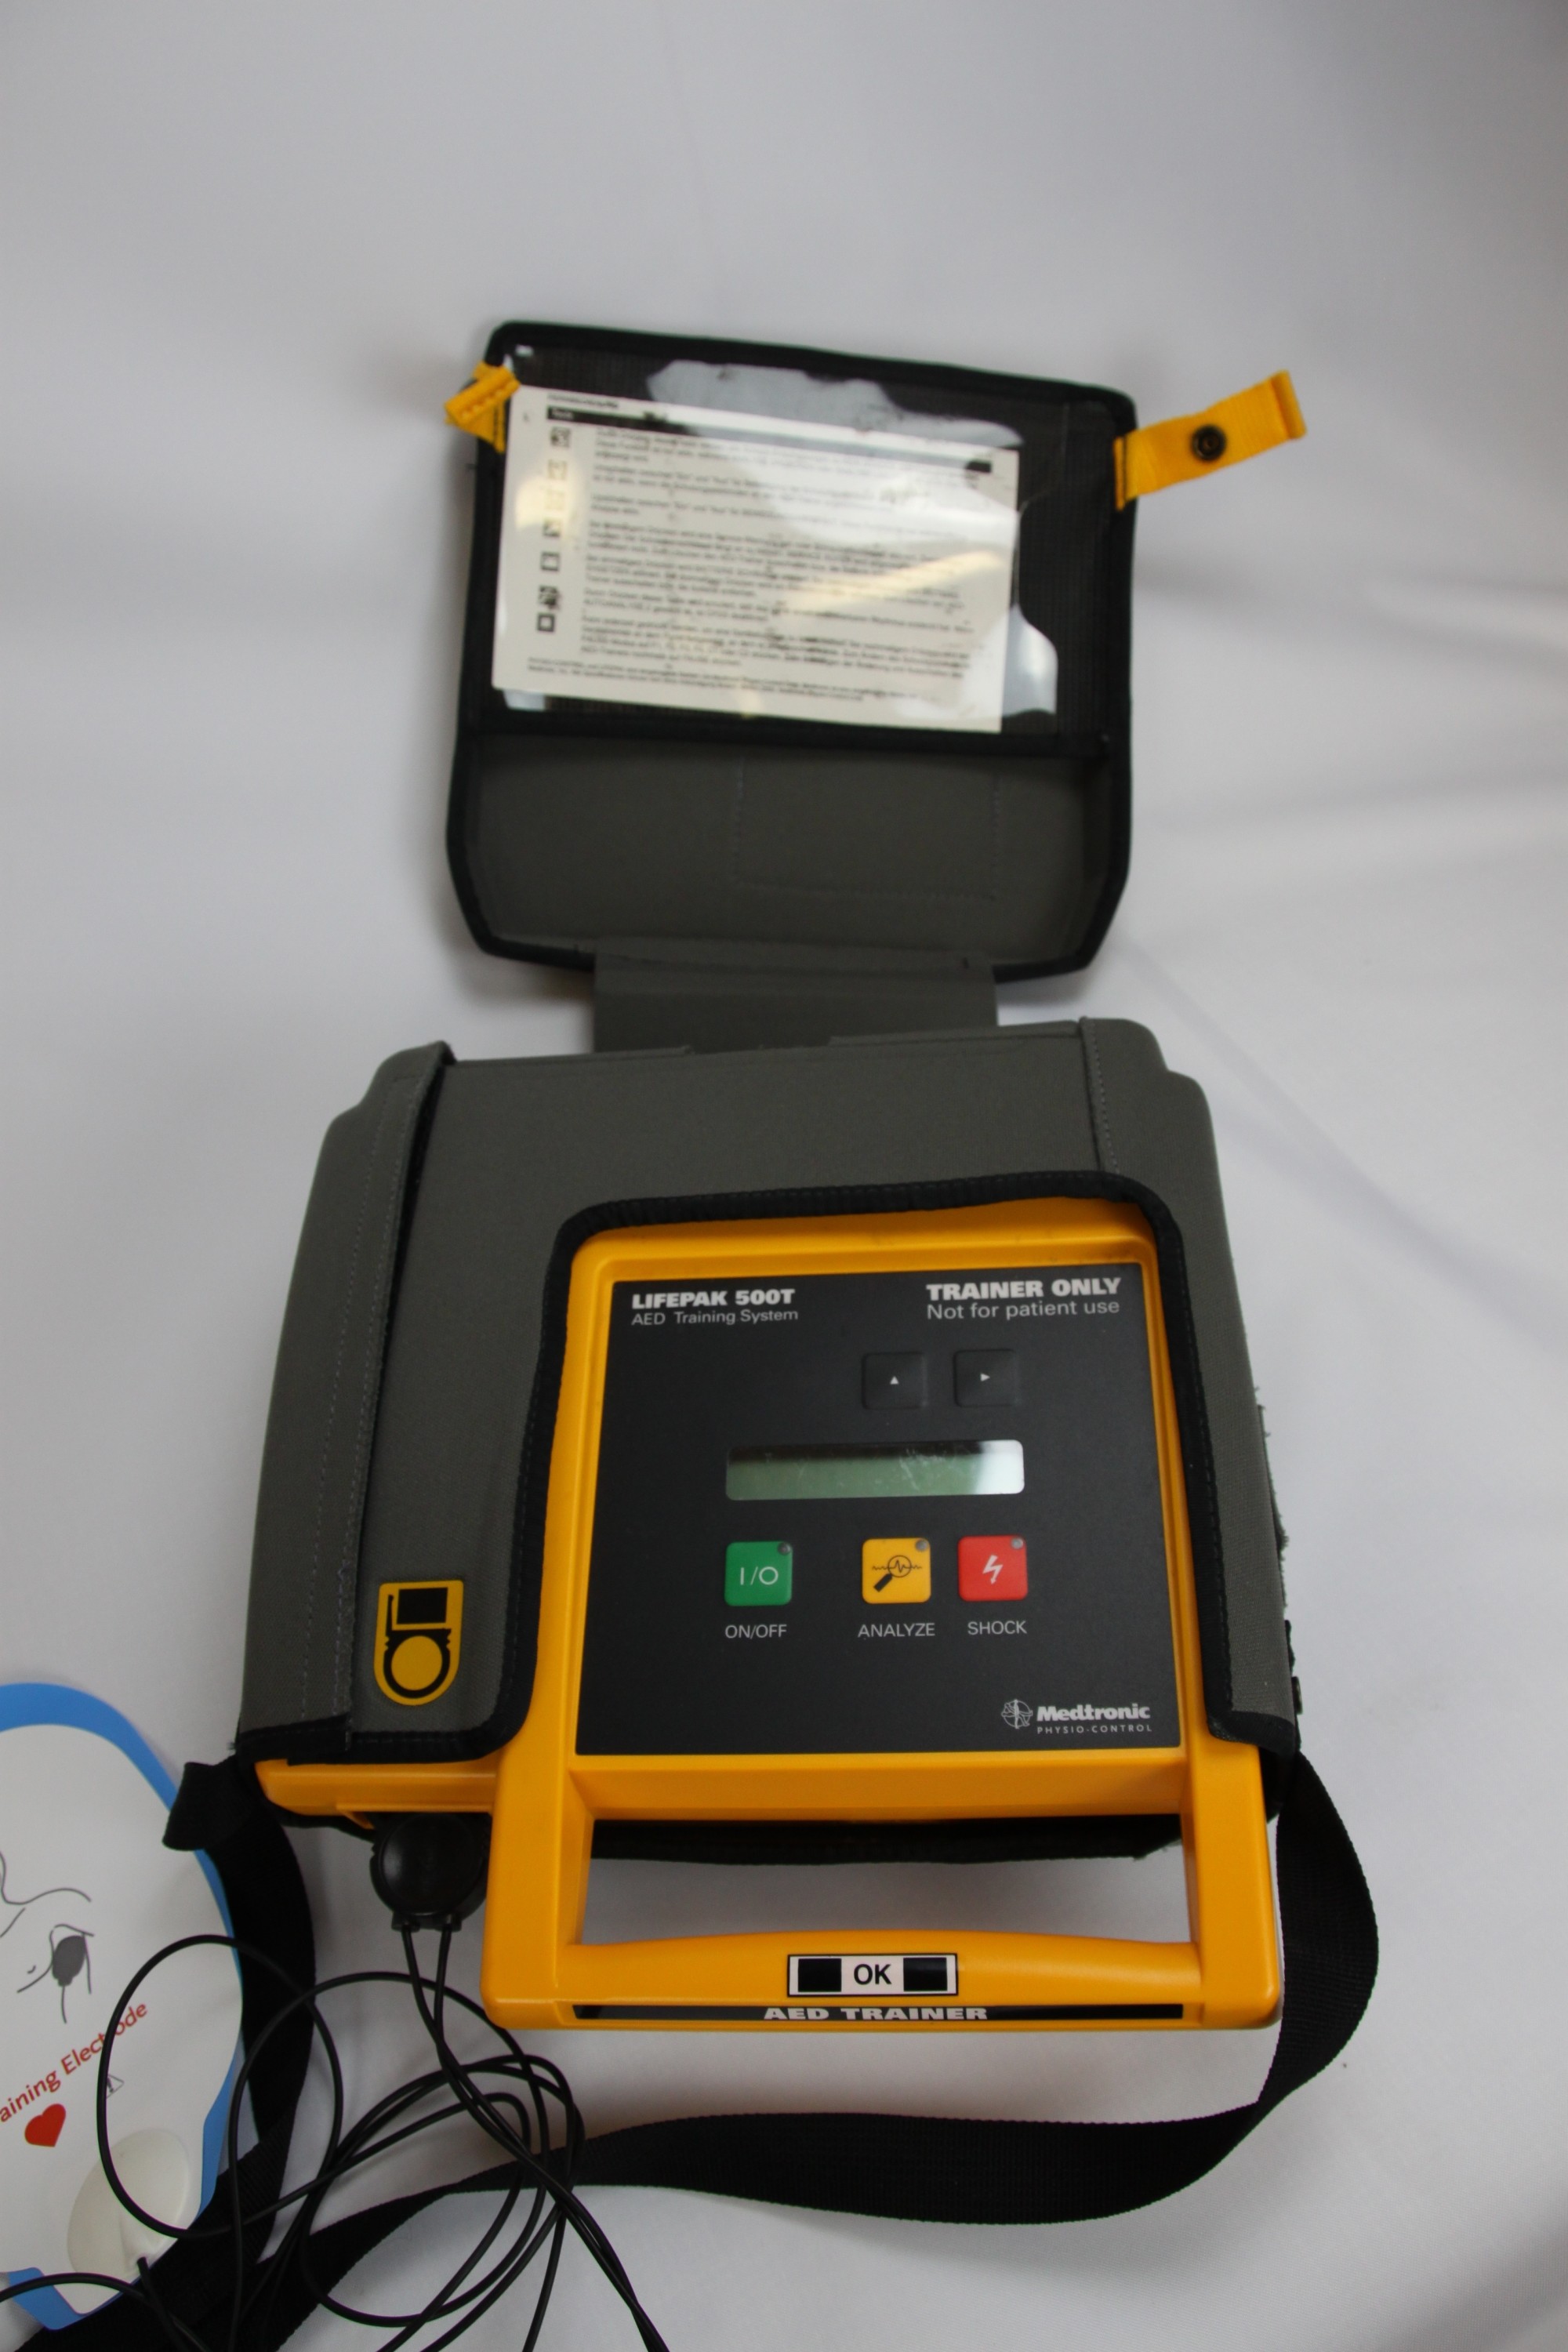 Defibrillationstrainer Medtronic Lifepak 500T, geöffnet (Krankenhausmuseum Bielefeld e.V. CC BY-NC-SA)